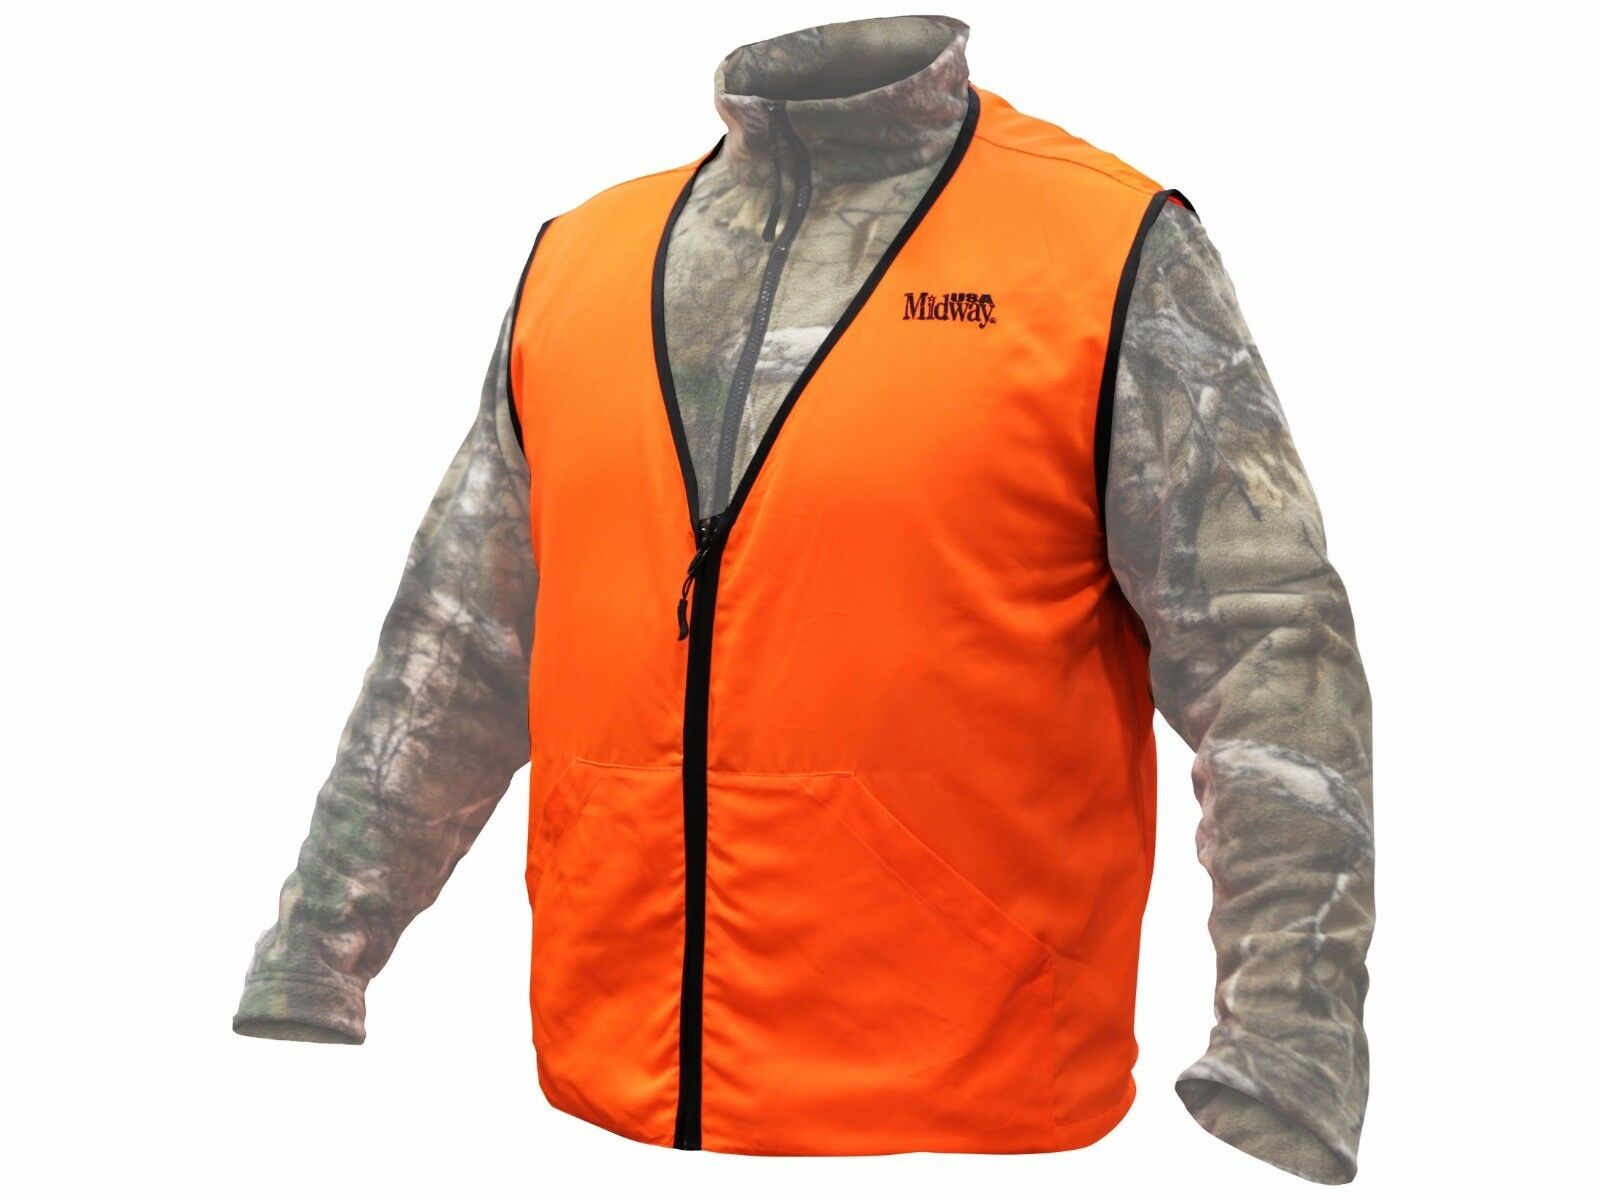 Men's Blaze Orange Vest Hunting Shooting Emergency Safety 2 Pockets Quality Vest